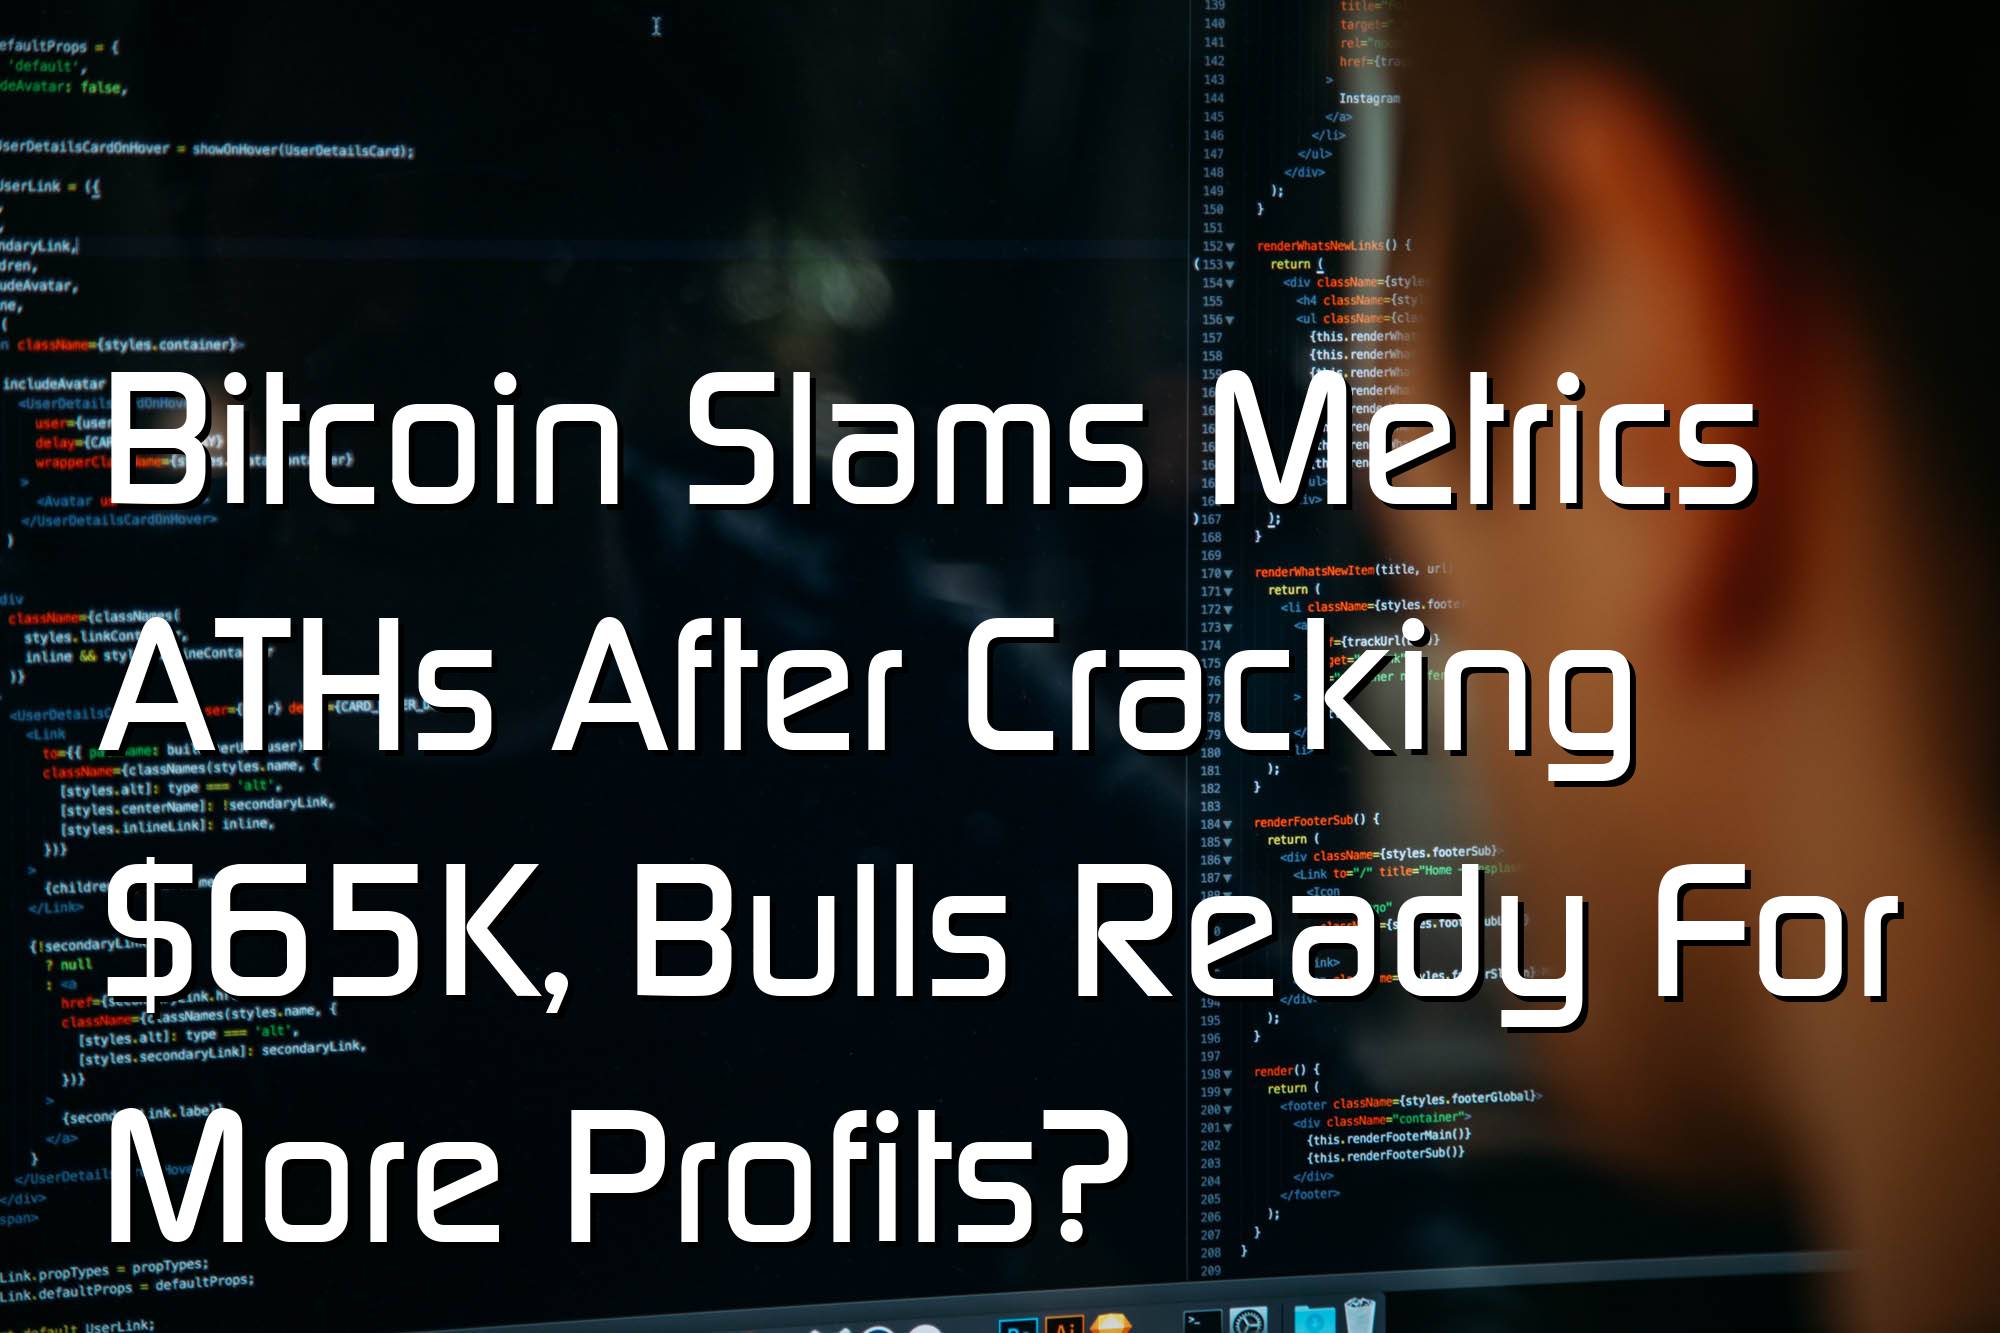 @$63002.58 Bitcoin Slams Metrics ATHs After Cracking $65K, Bulls Ready For More Profits?